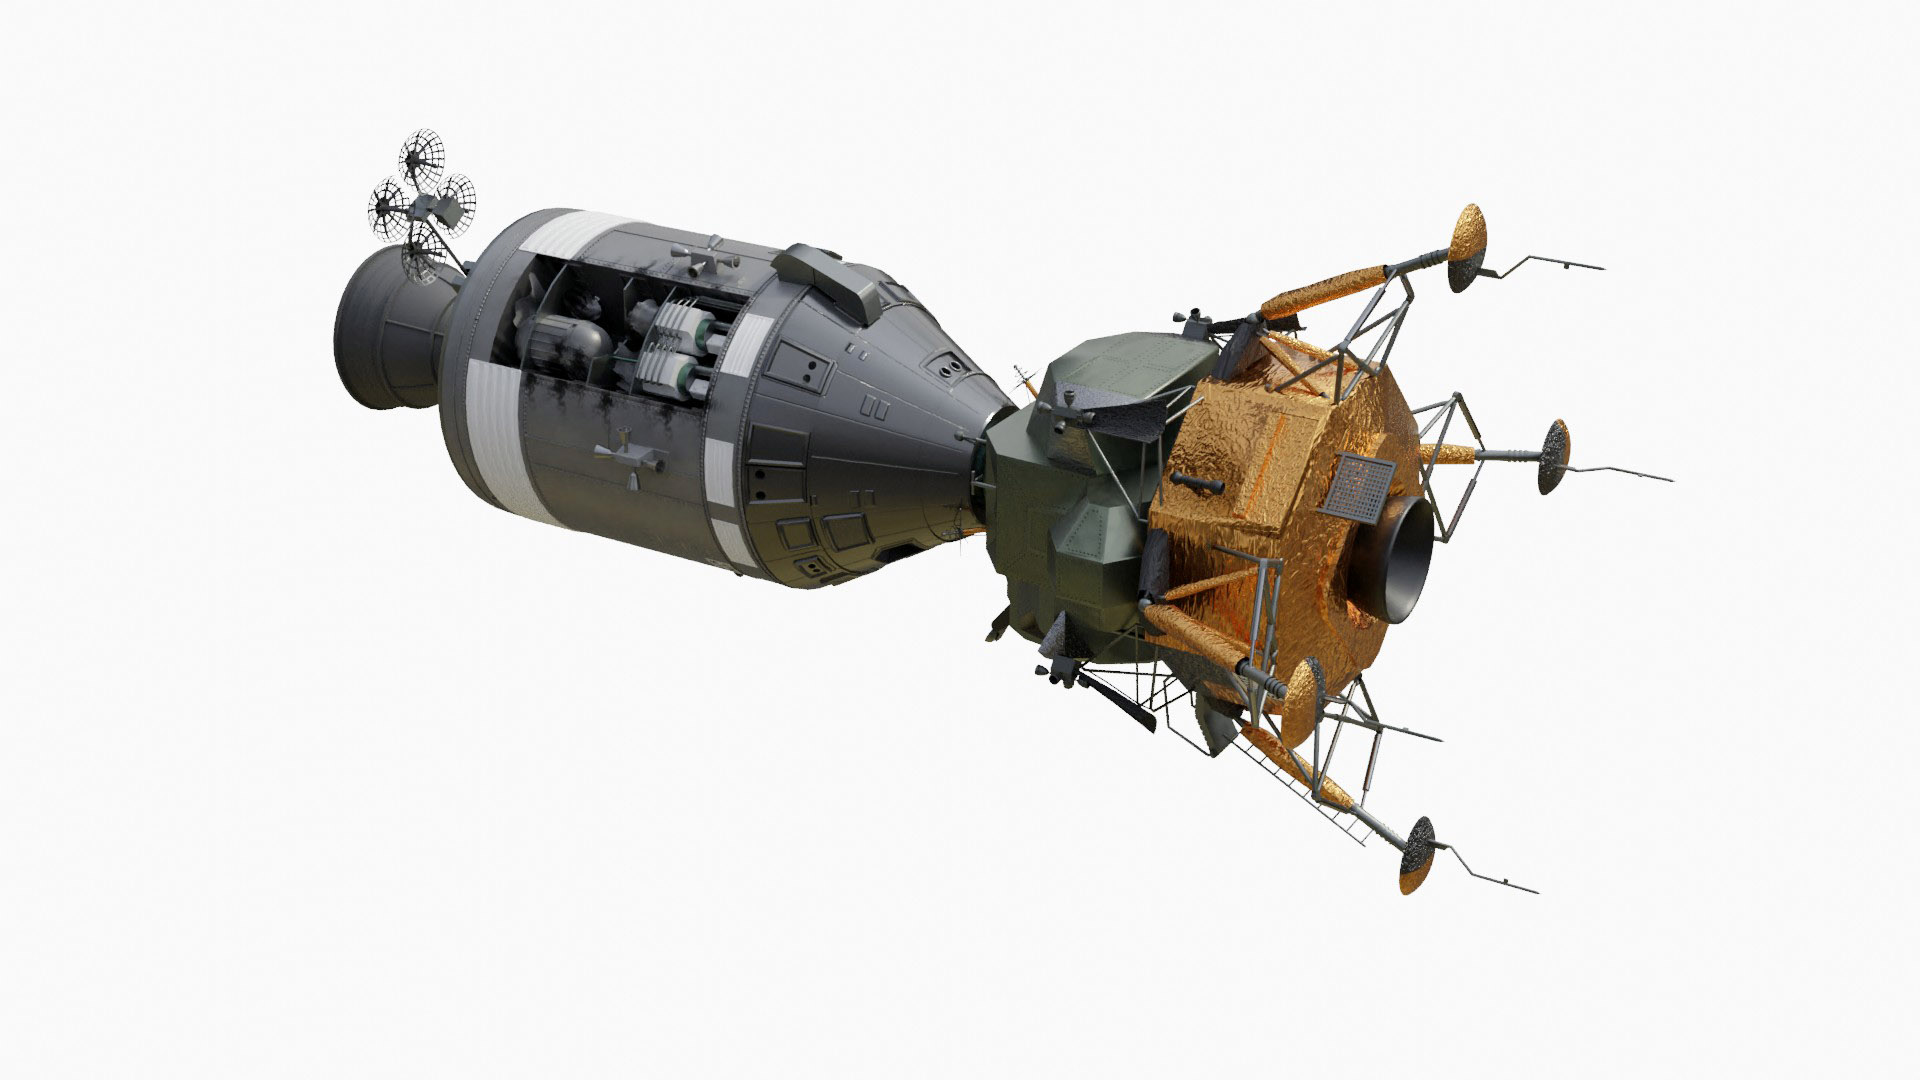 apollo spacecraft apollo 13 model